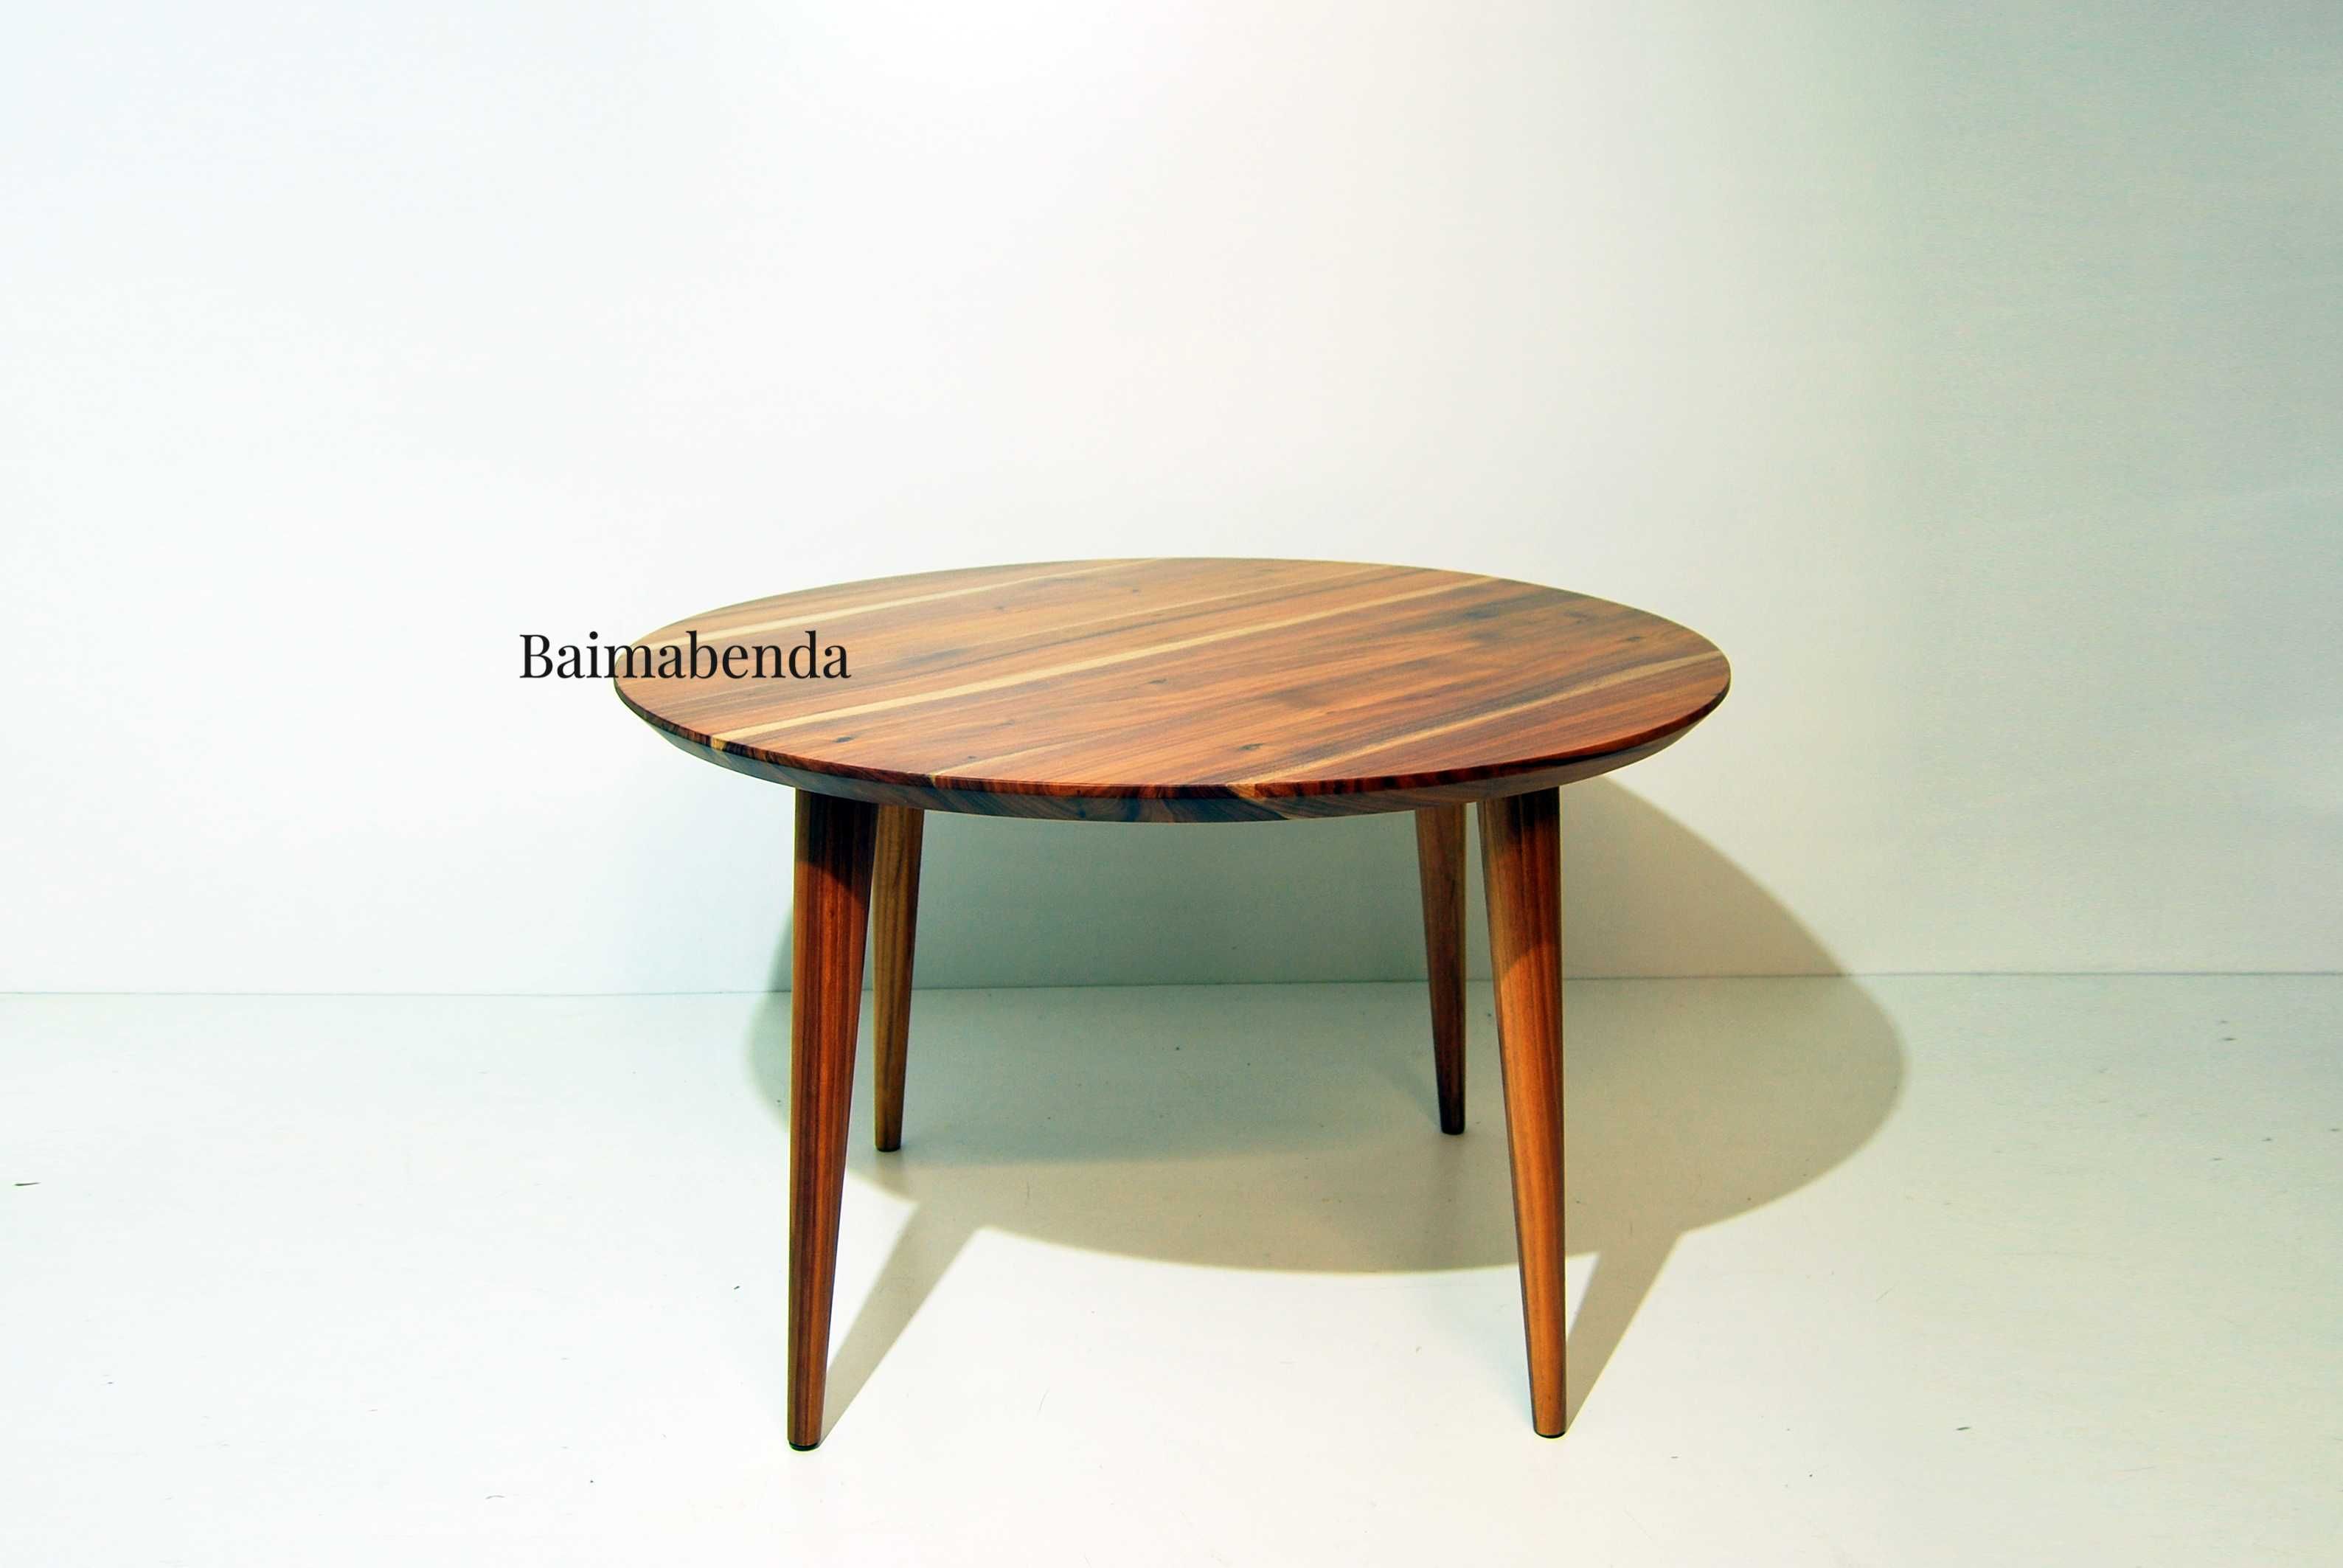 Mesa de jantar madeira maciça retro vintage estilo nórdico